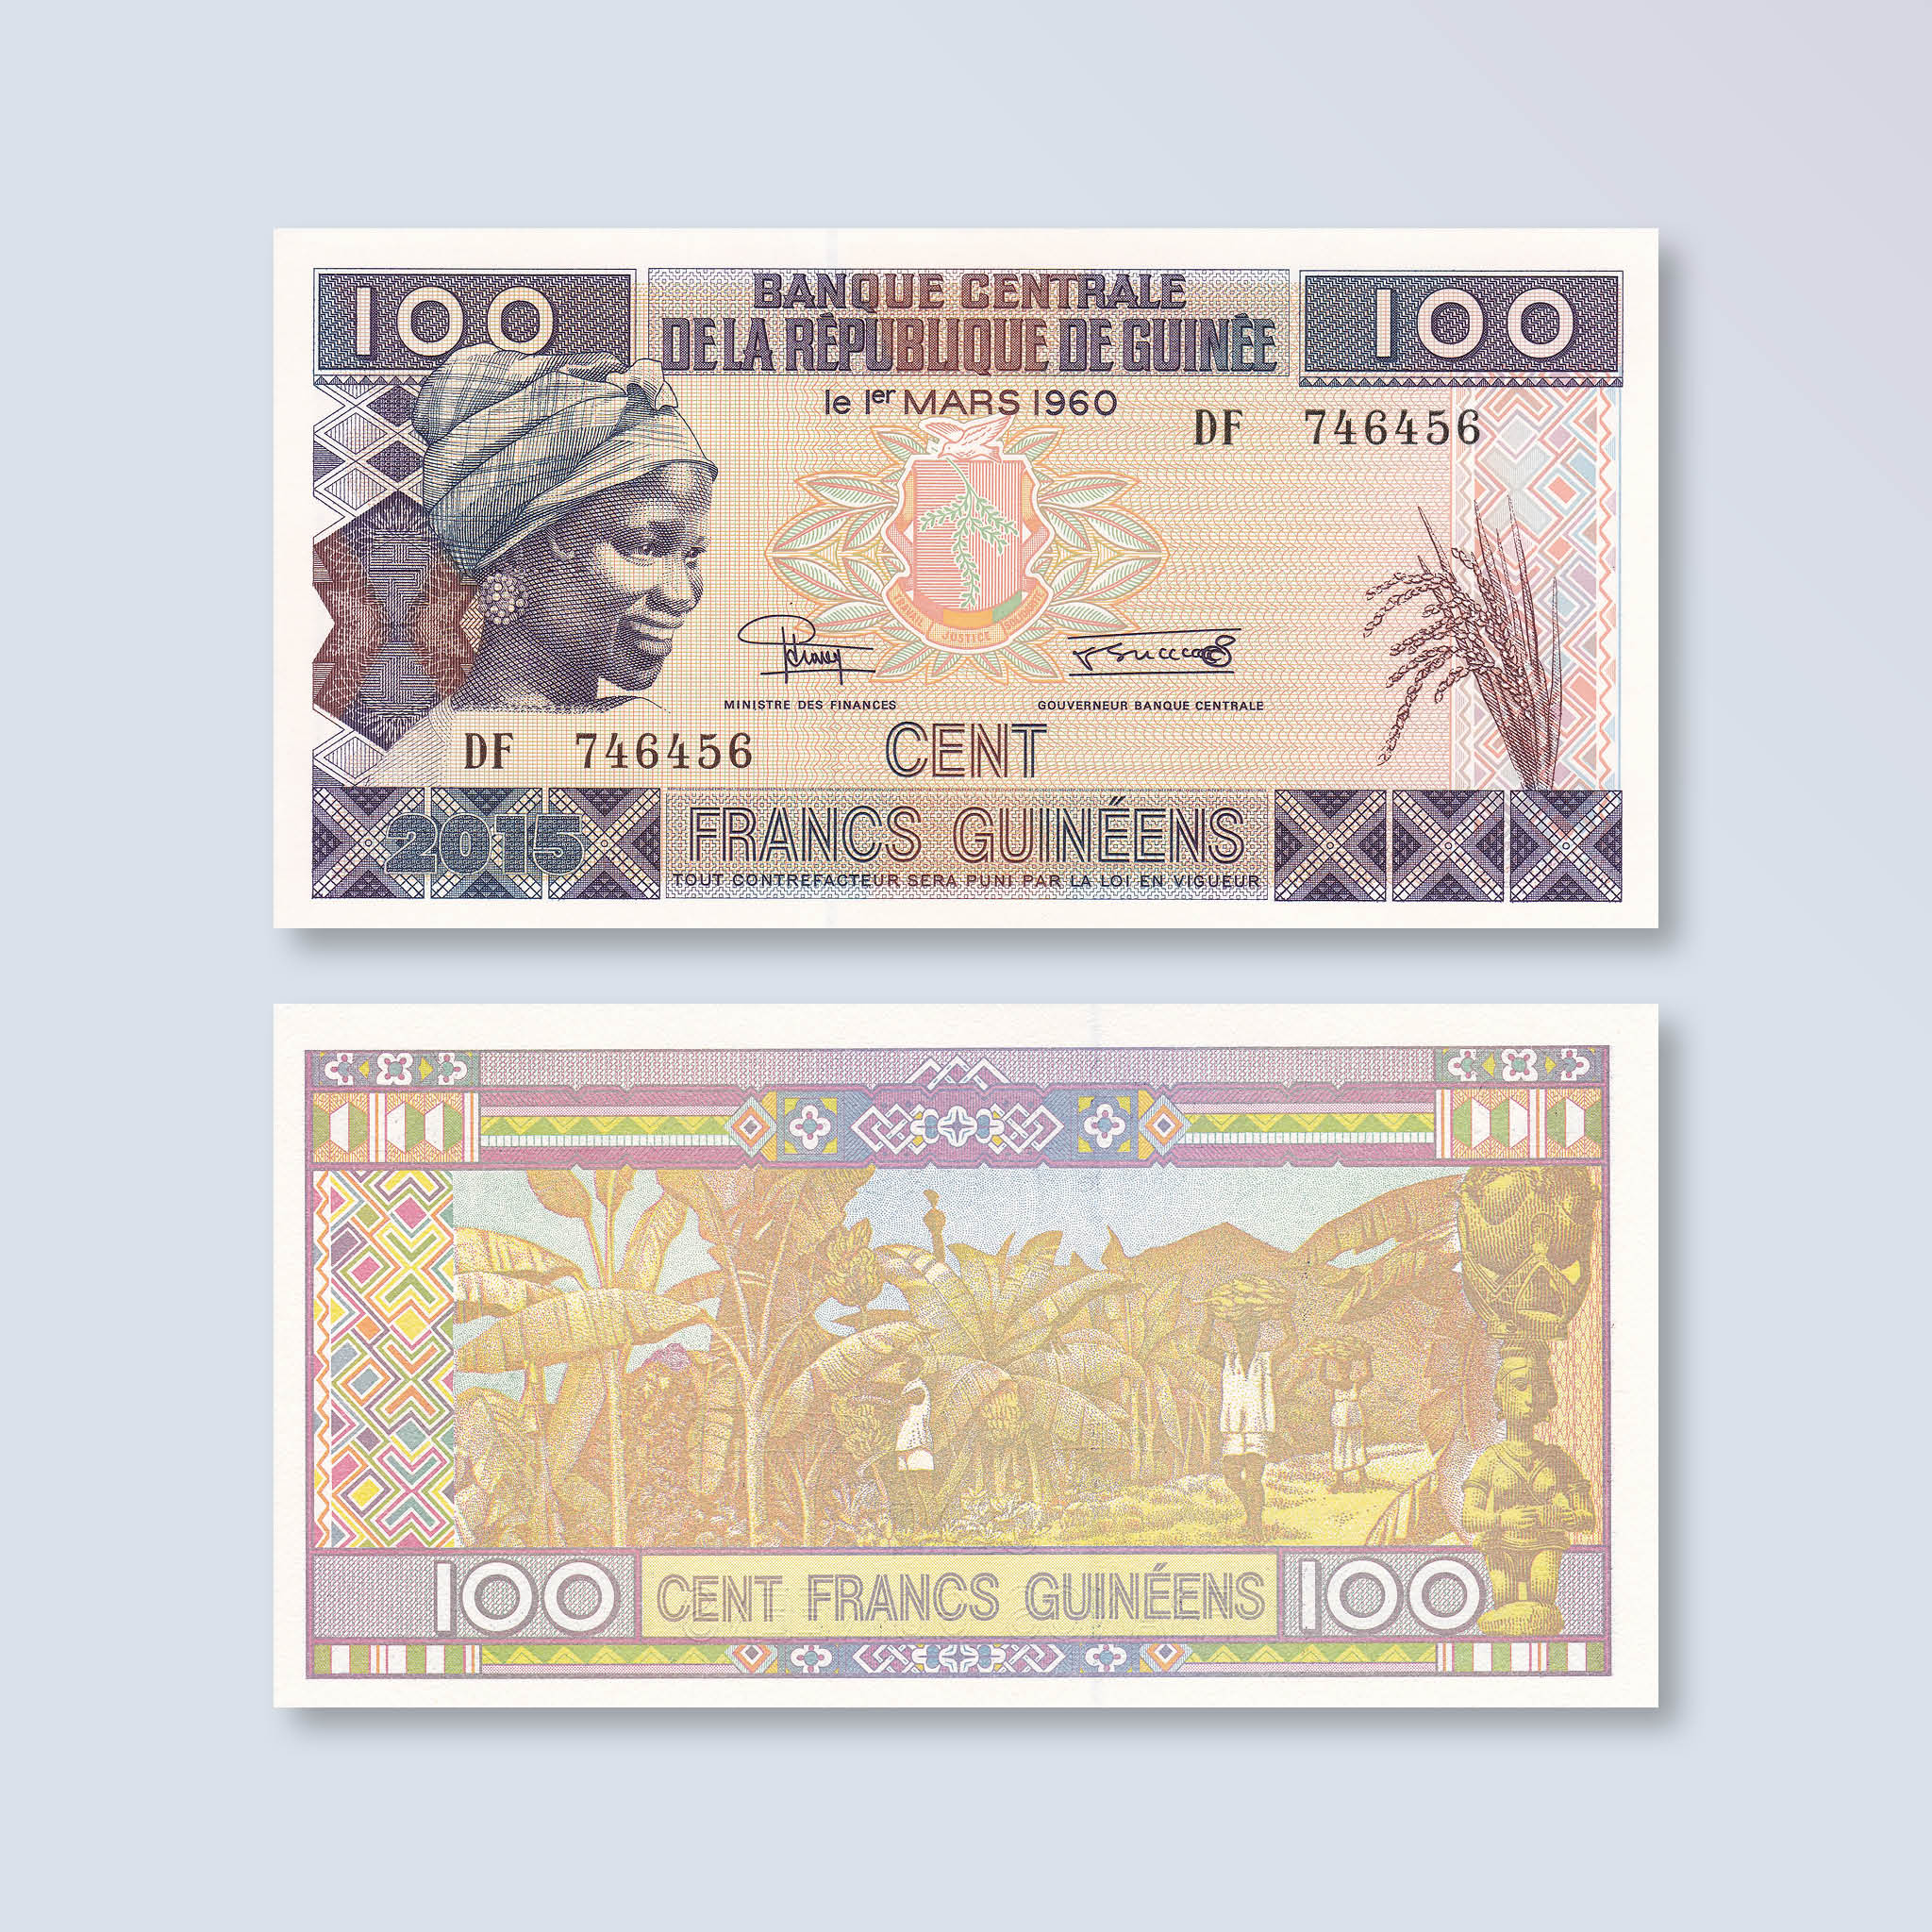 Guinea 100 Francs, 2015, B337a, PA47, UNC - Robert's World Money - World Banknotes